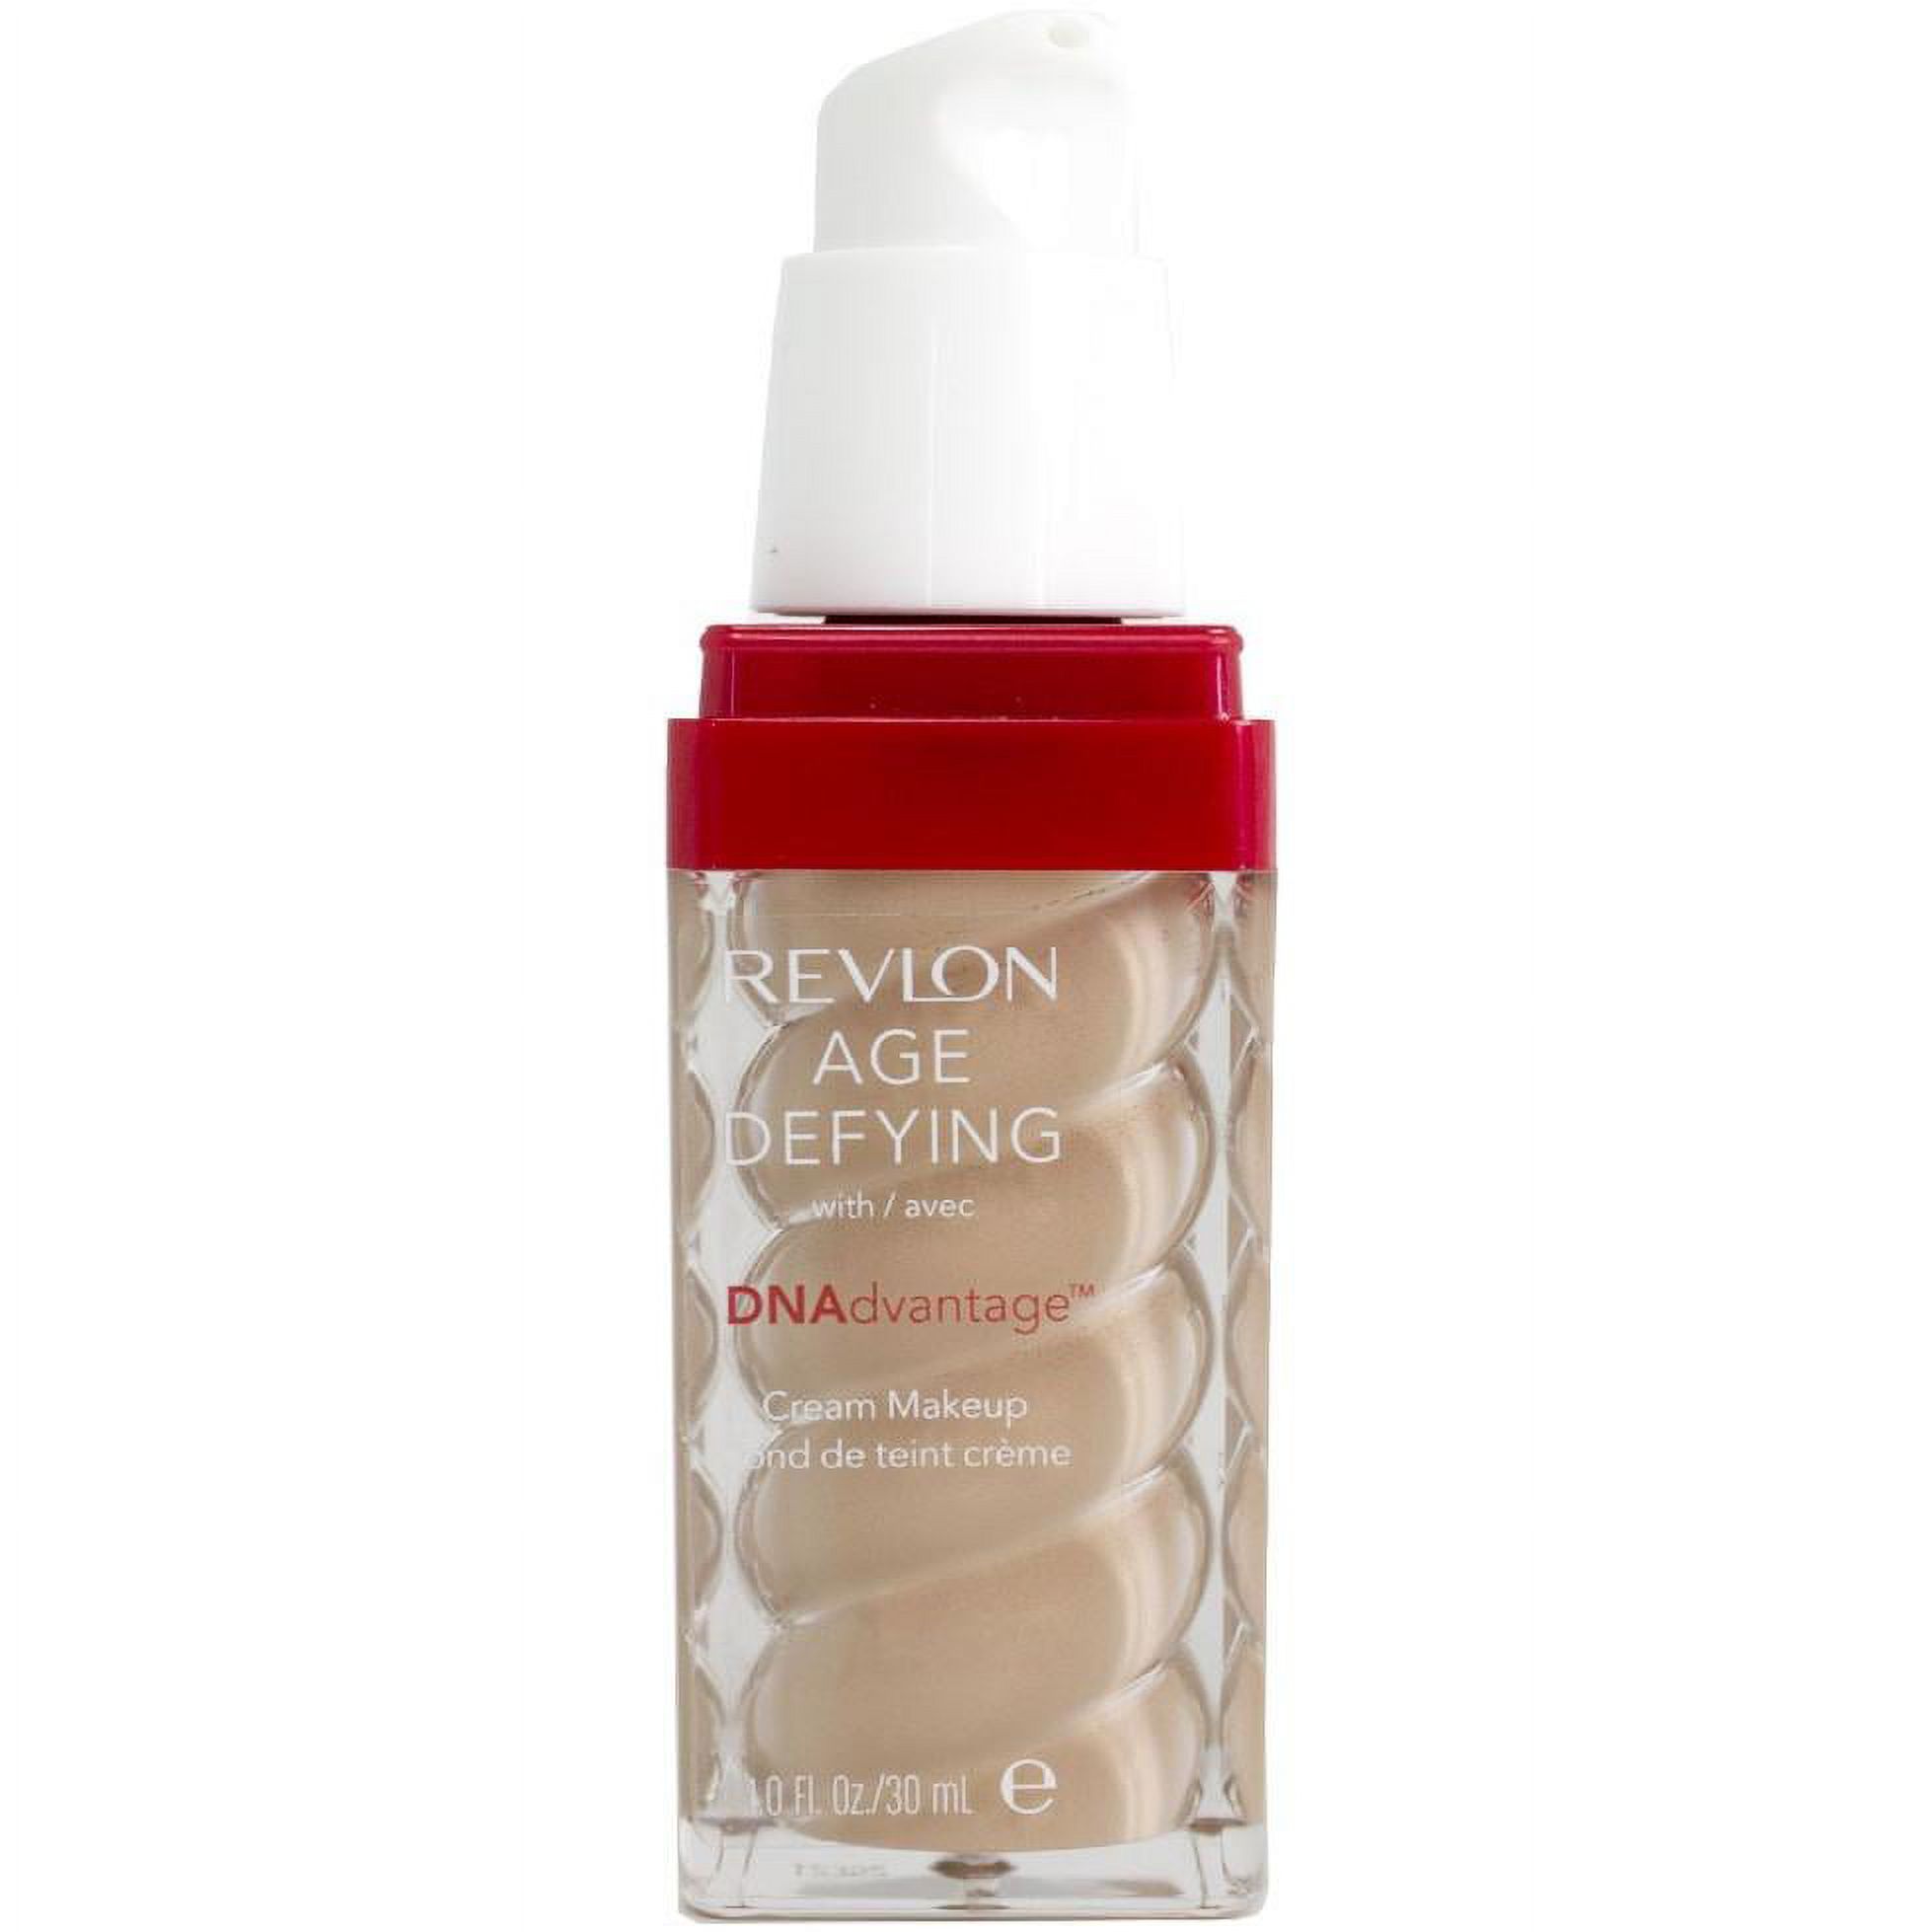 Revlon Age Defying with DNA Advantage Cream Makeup, 05 Fresh Ivory, 1 fl oz - image 3 of 12